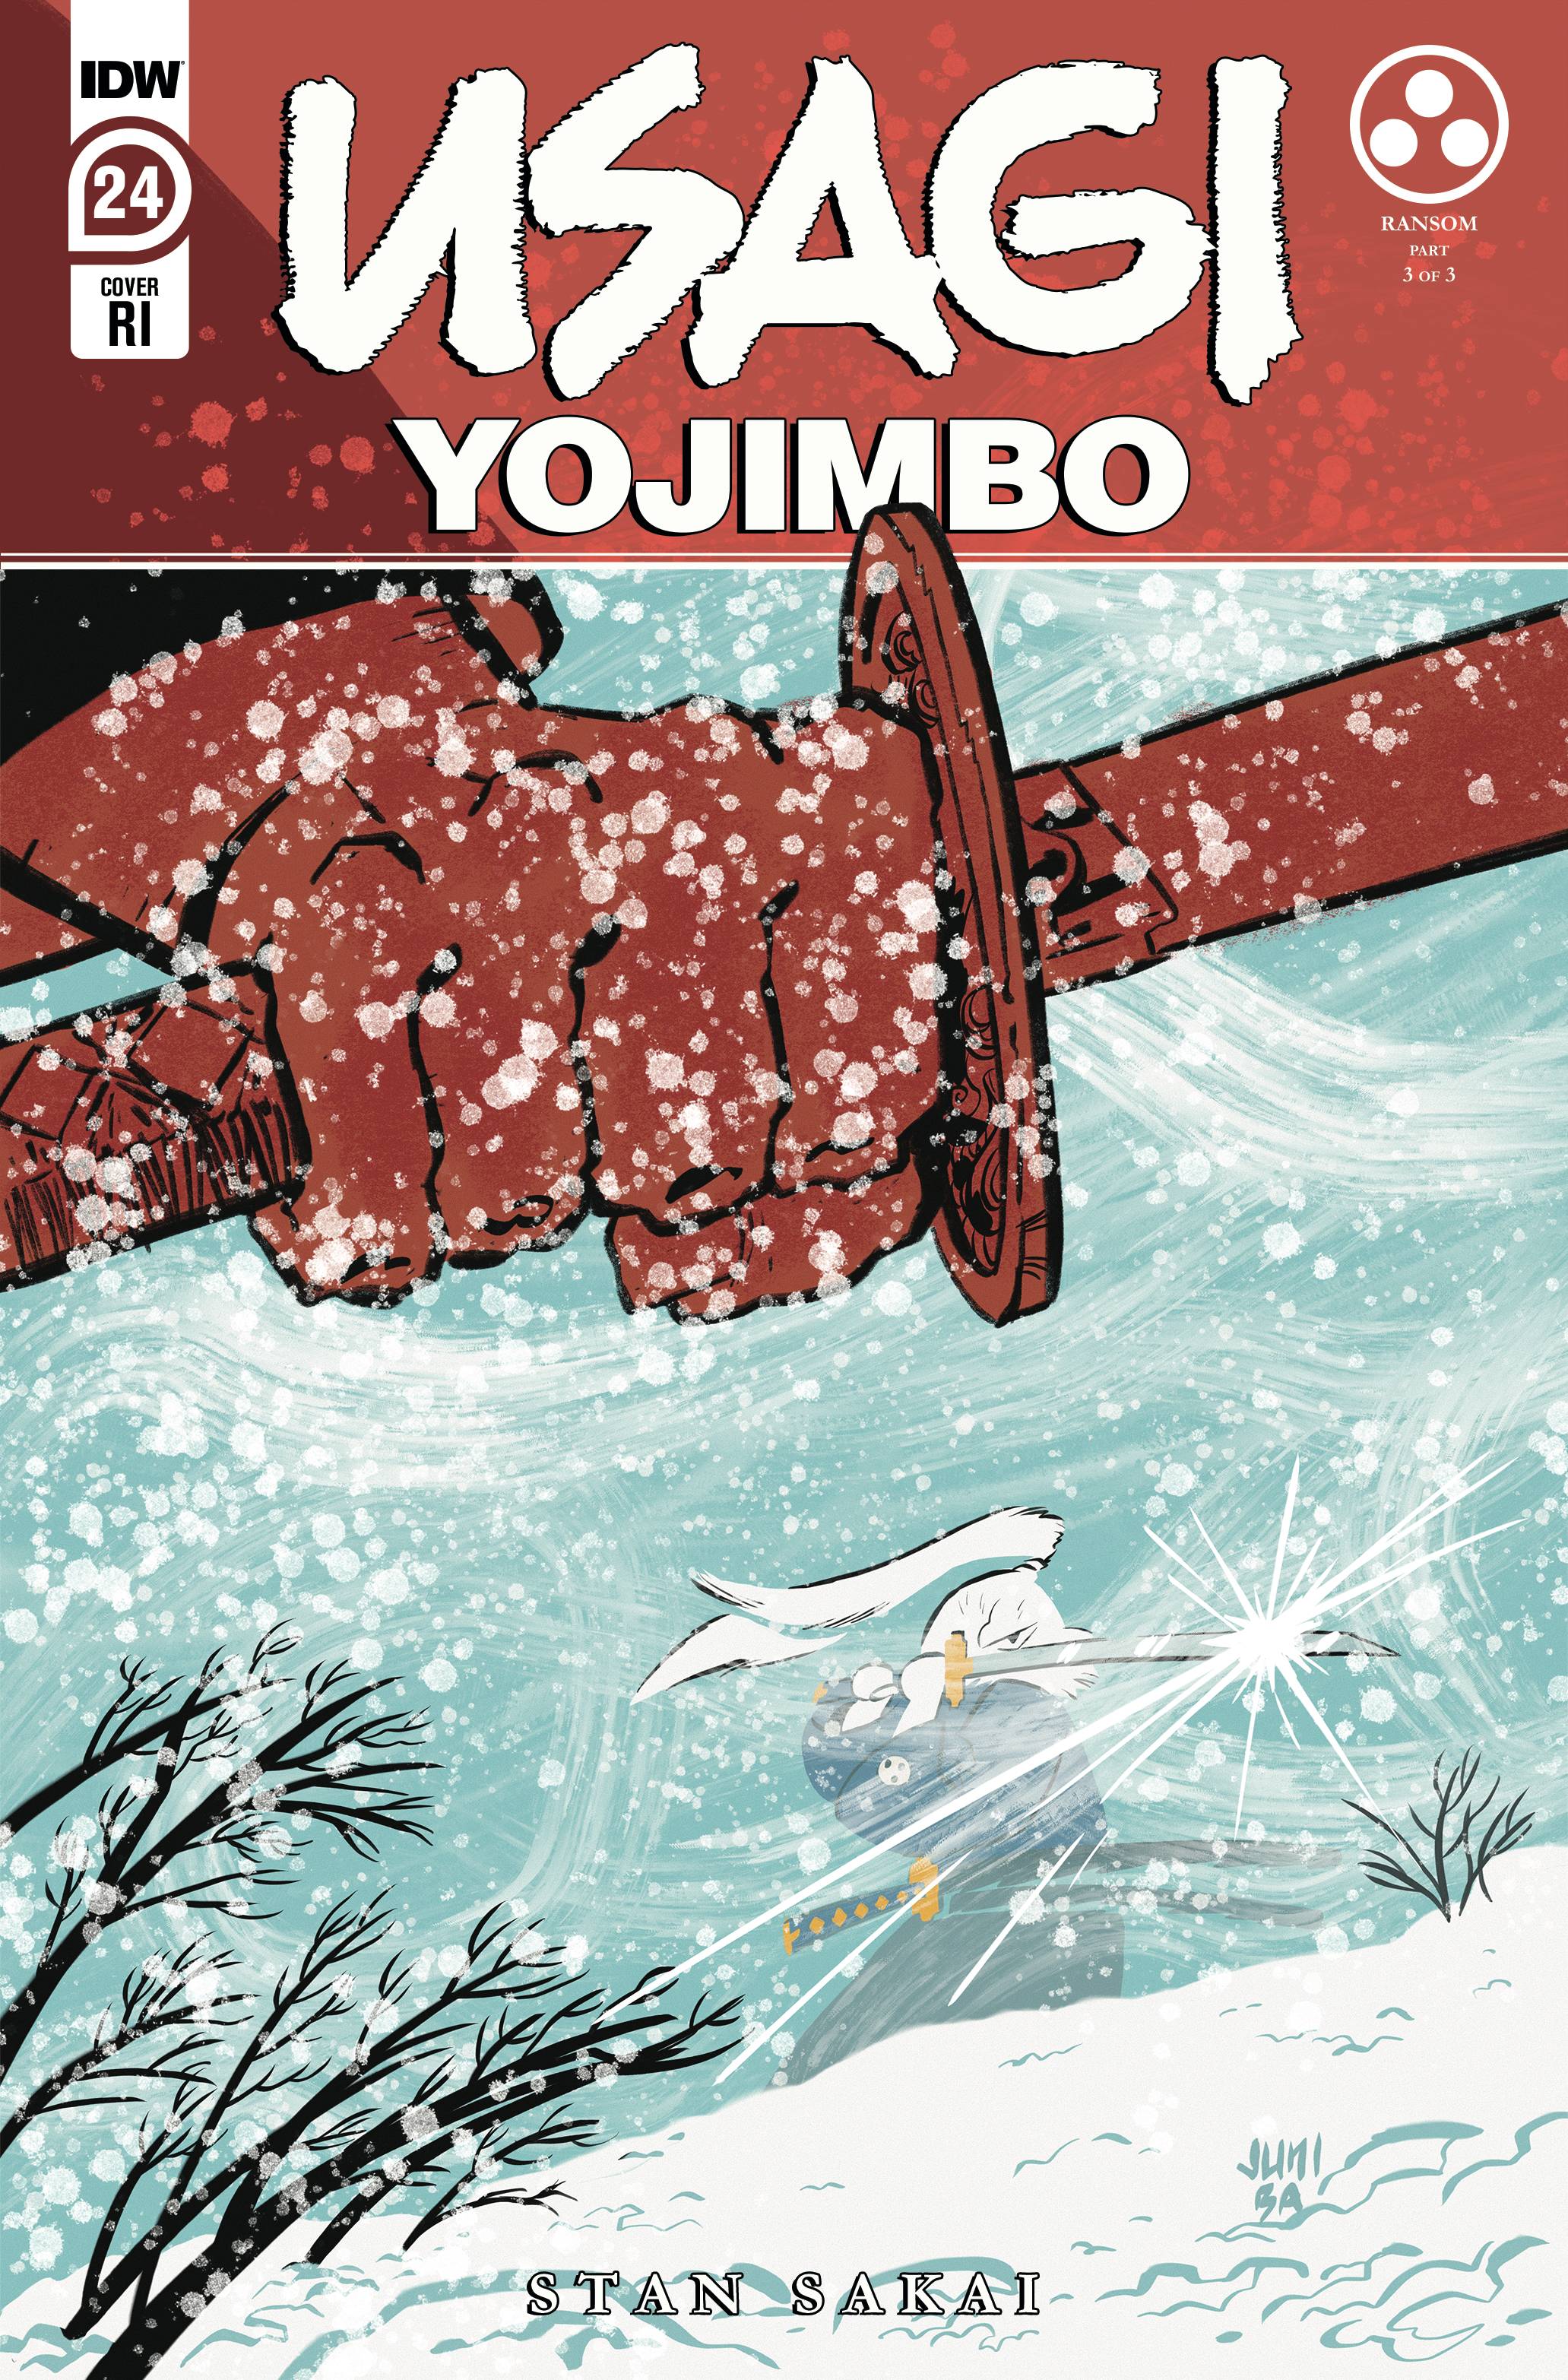 Usagi Yojimbo #24 Cover B 1 for 10 Incentive Ba (2019)